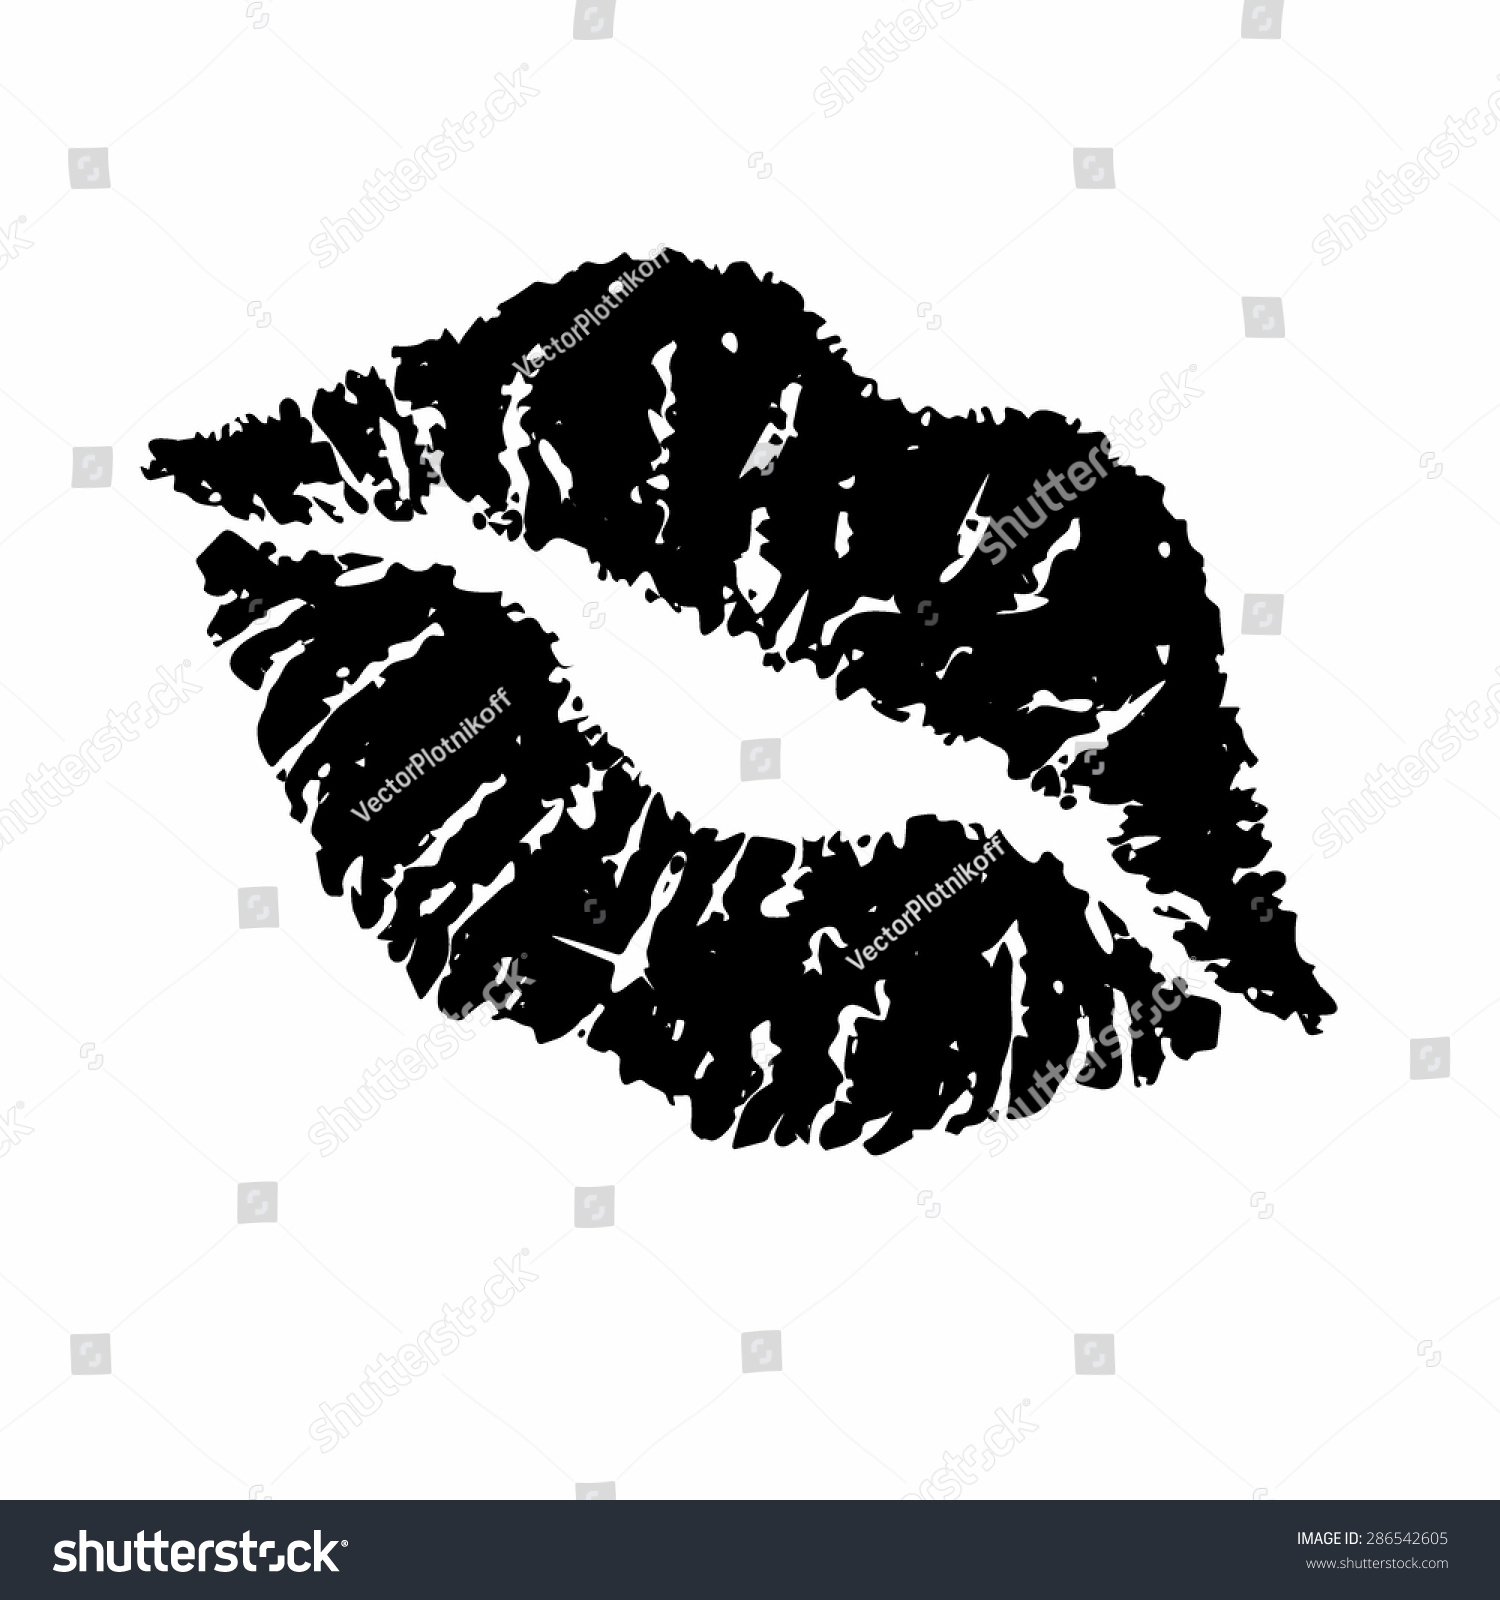 lips clipart black and white - photo #40